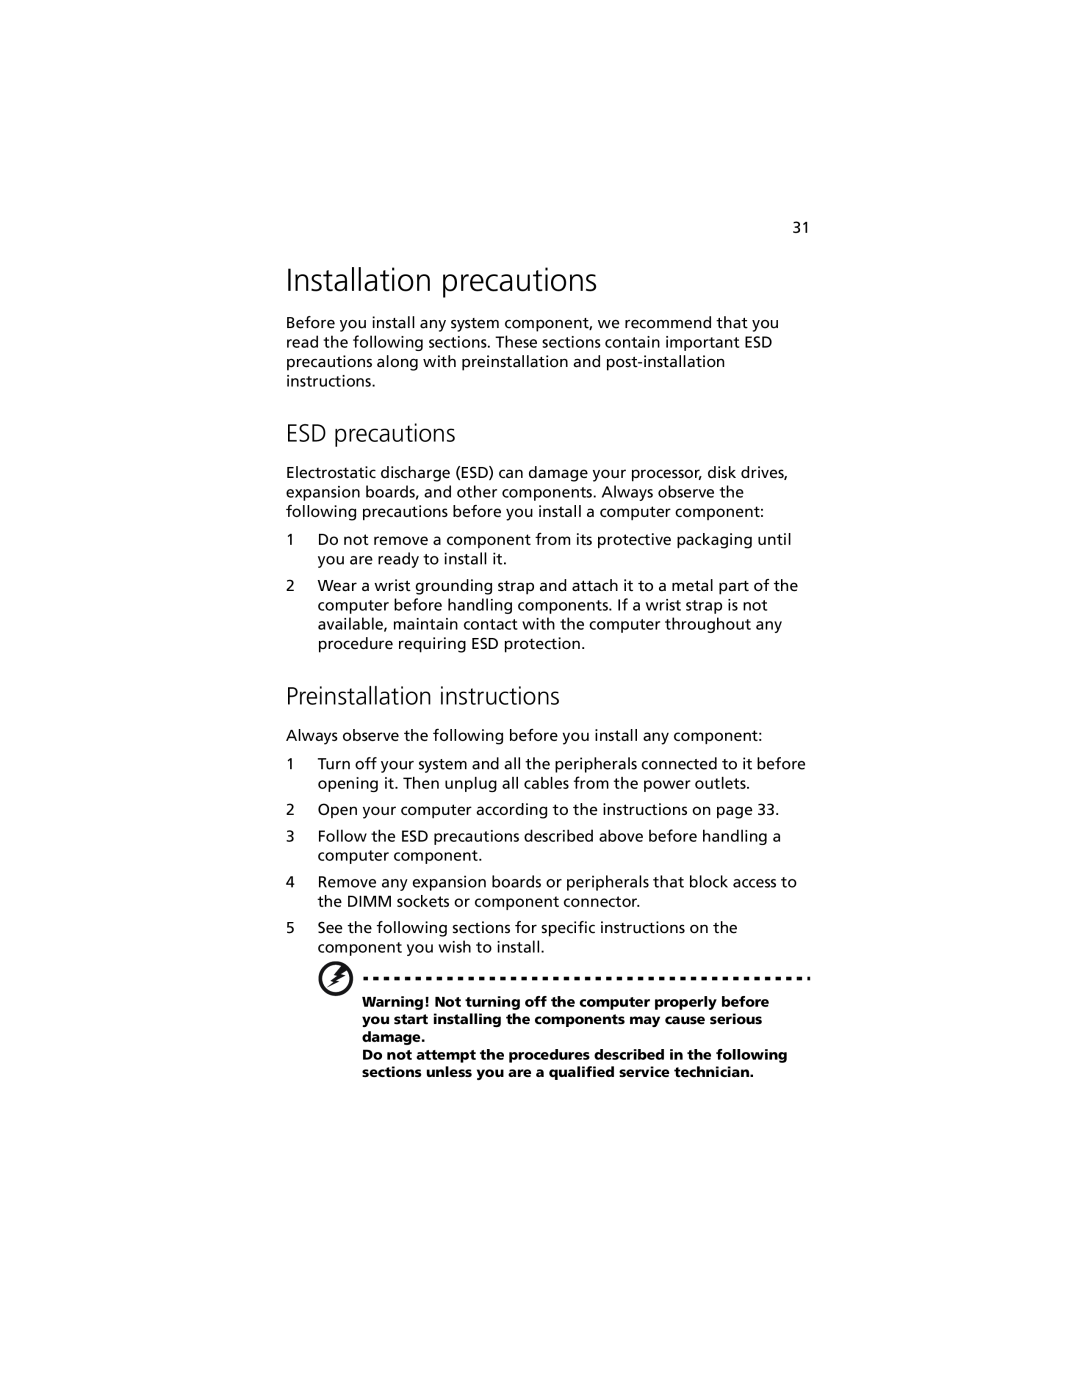 Acer G301 manual Installation precautions, ESD precautions, Preinstallation instructions 